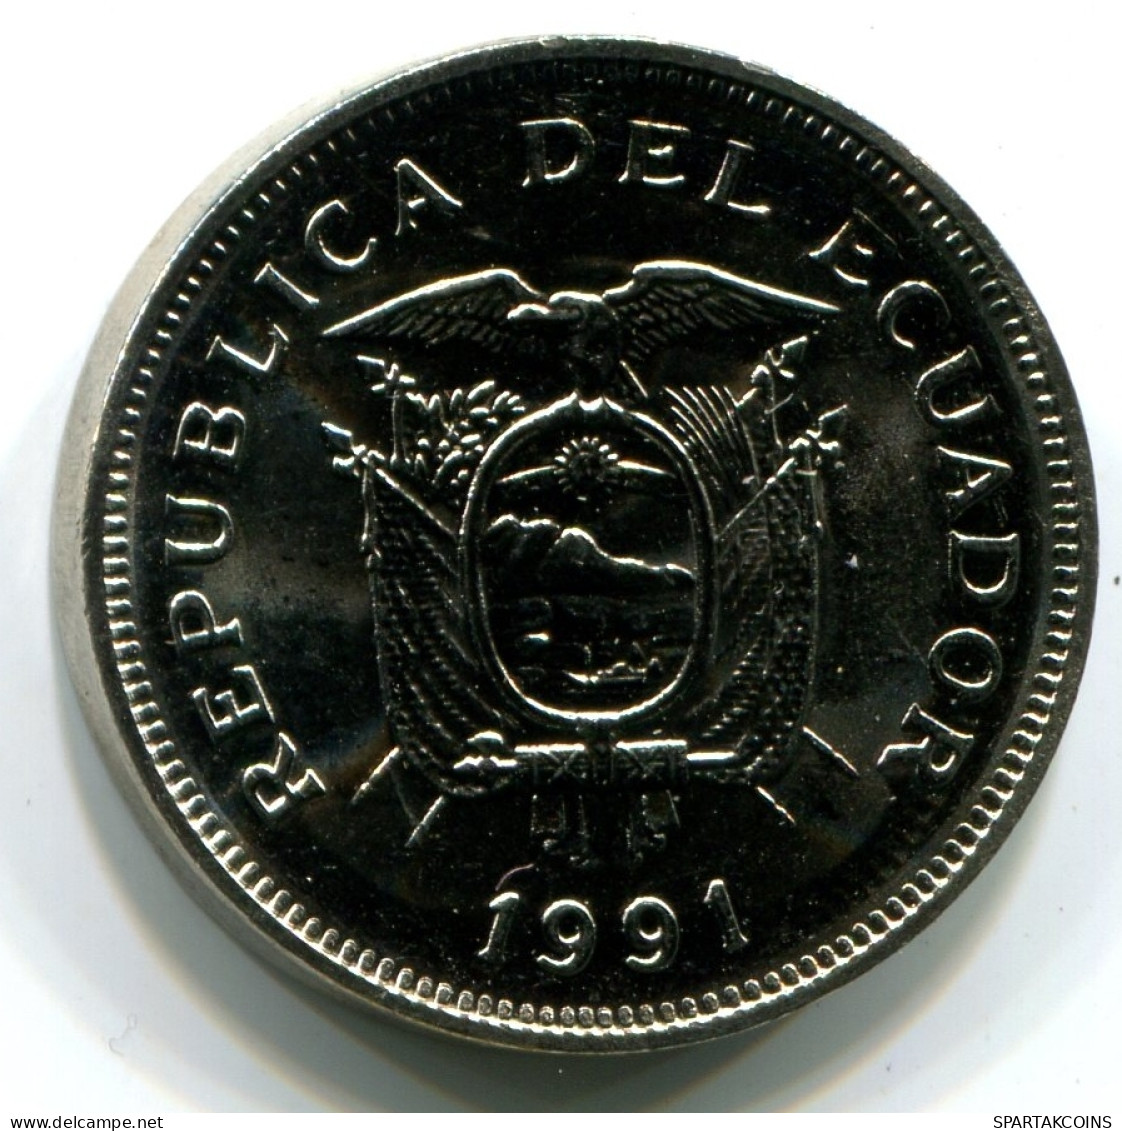 20 SUCRE 1991 ECUADOR UNC Coin #W11118.U - Ecuador